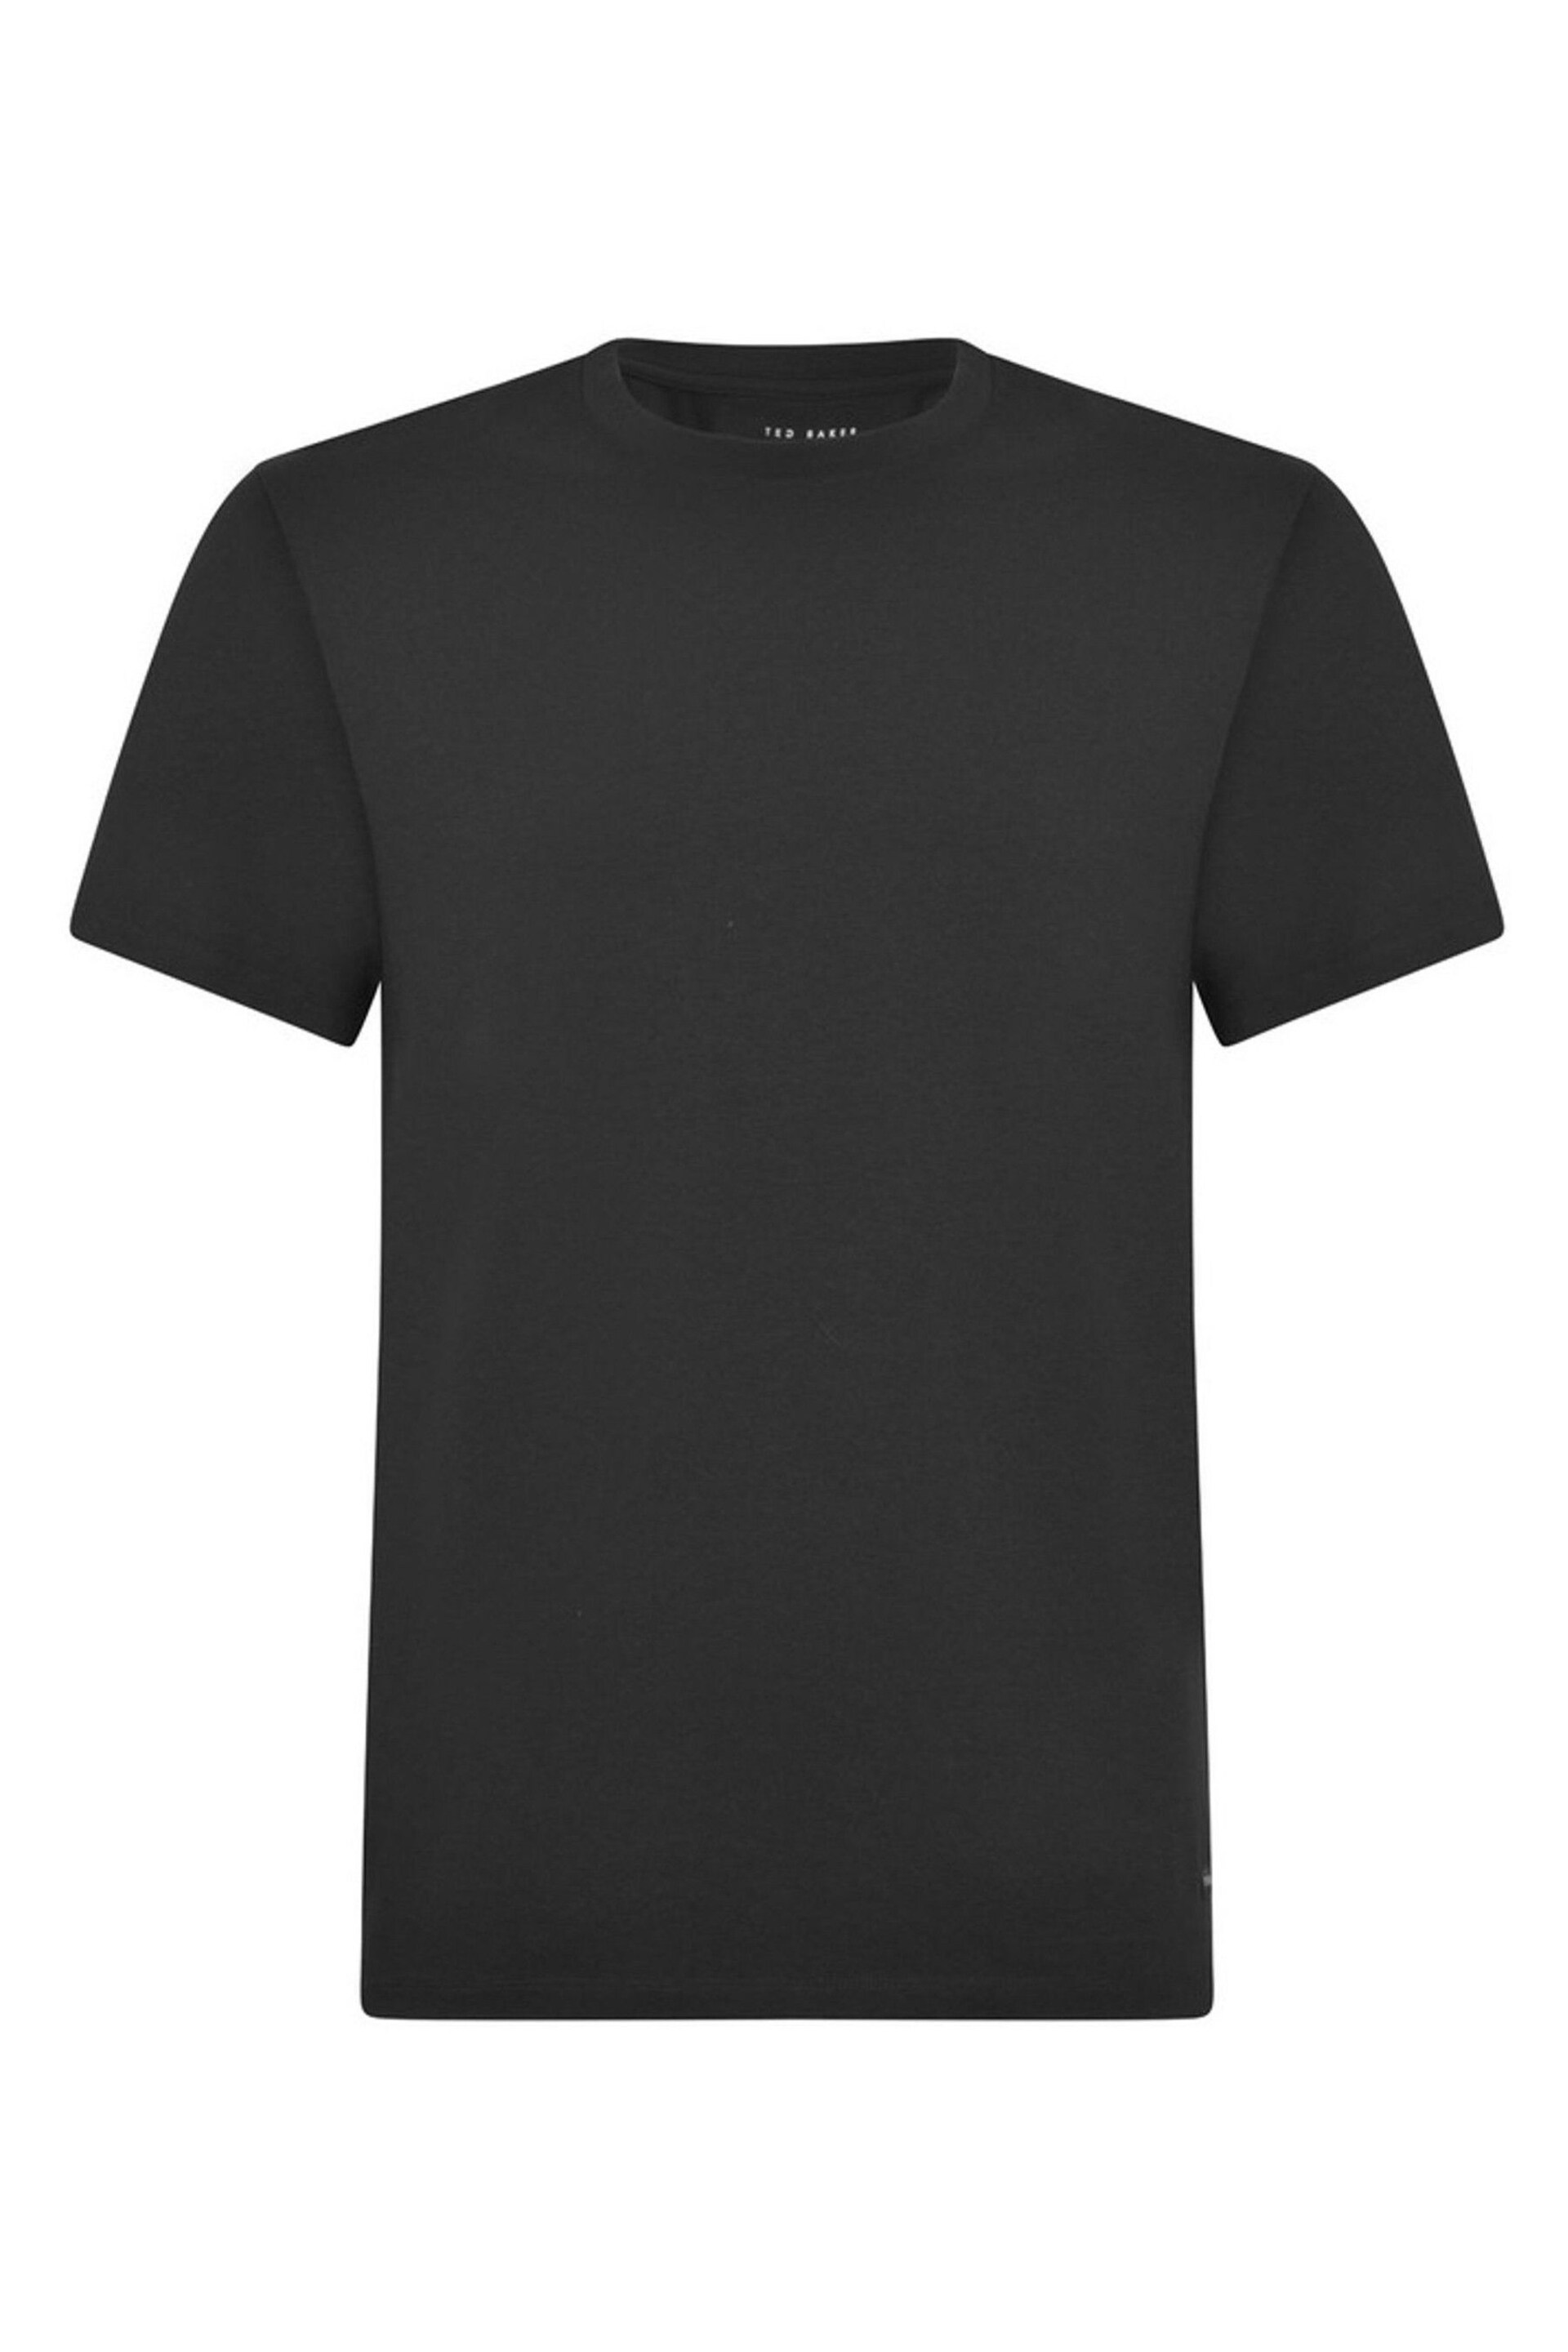 Ted Baker Black Crew Neck T-Shirt 3 Pack - Image 5 of 6